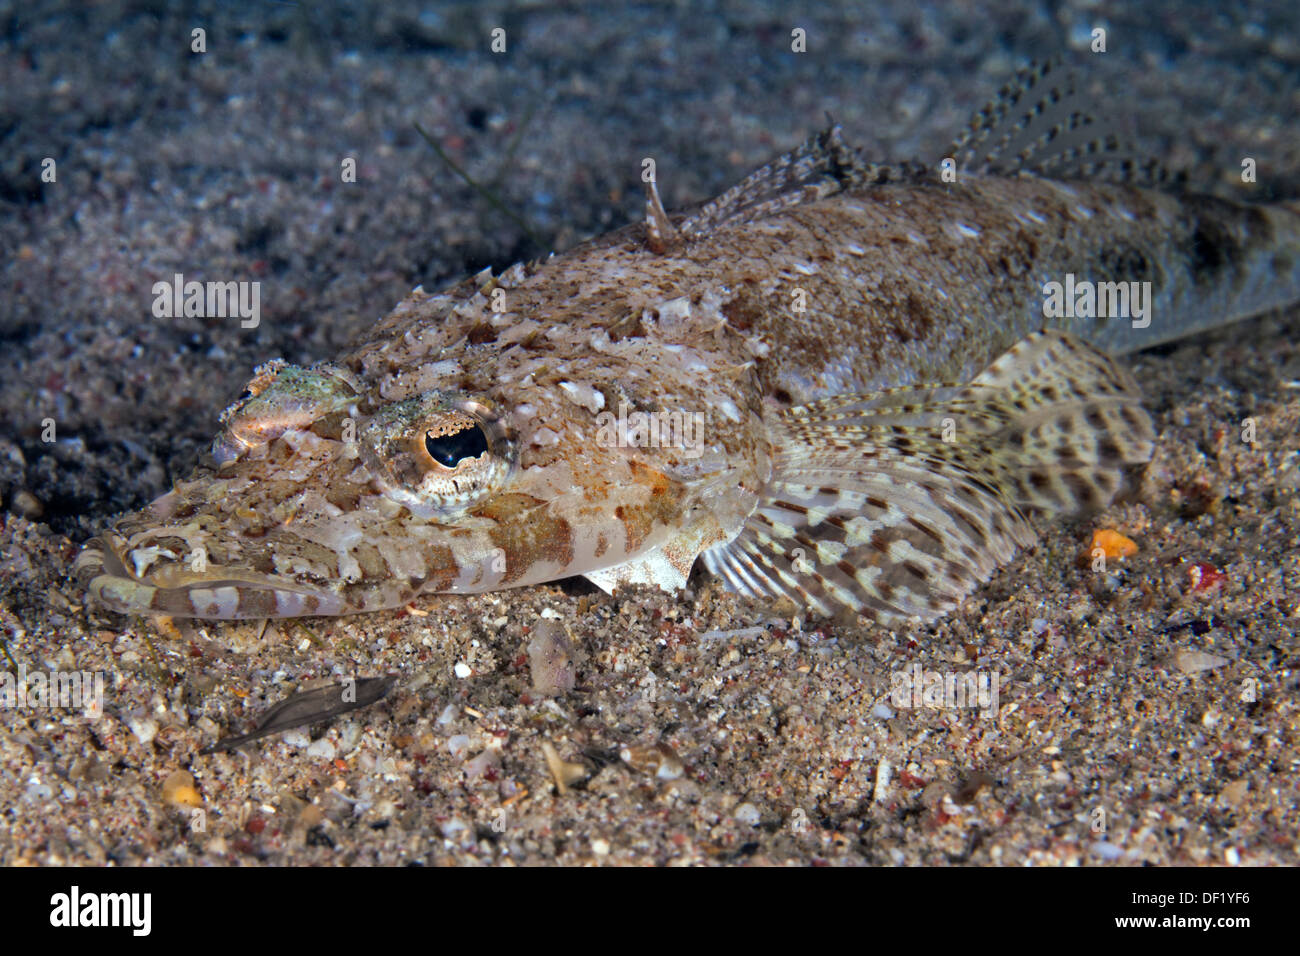 Crocodile fish (Platycephalidae) camouflaged on sandy sea floor at night. Stock Photo